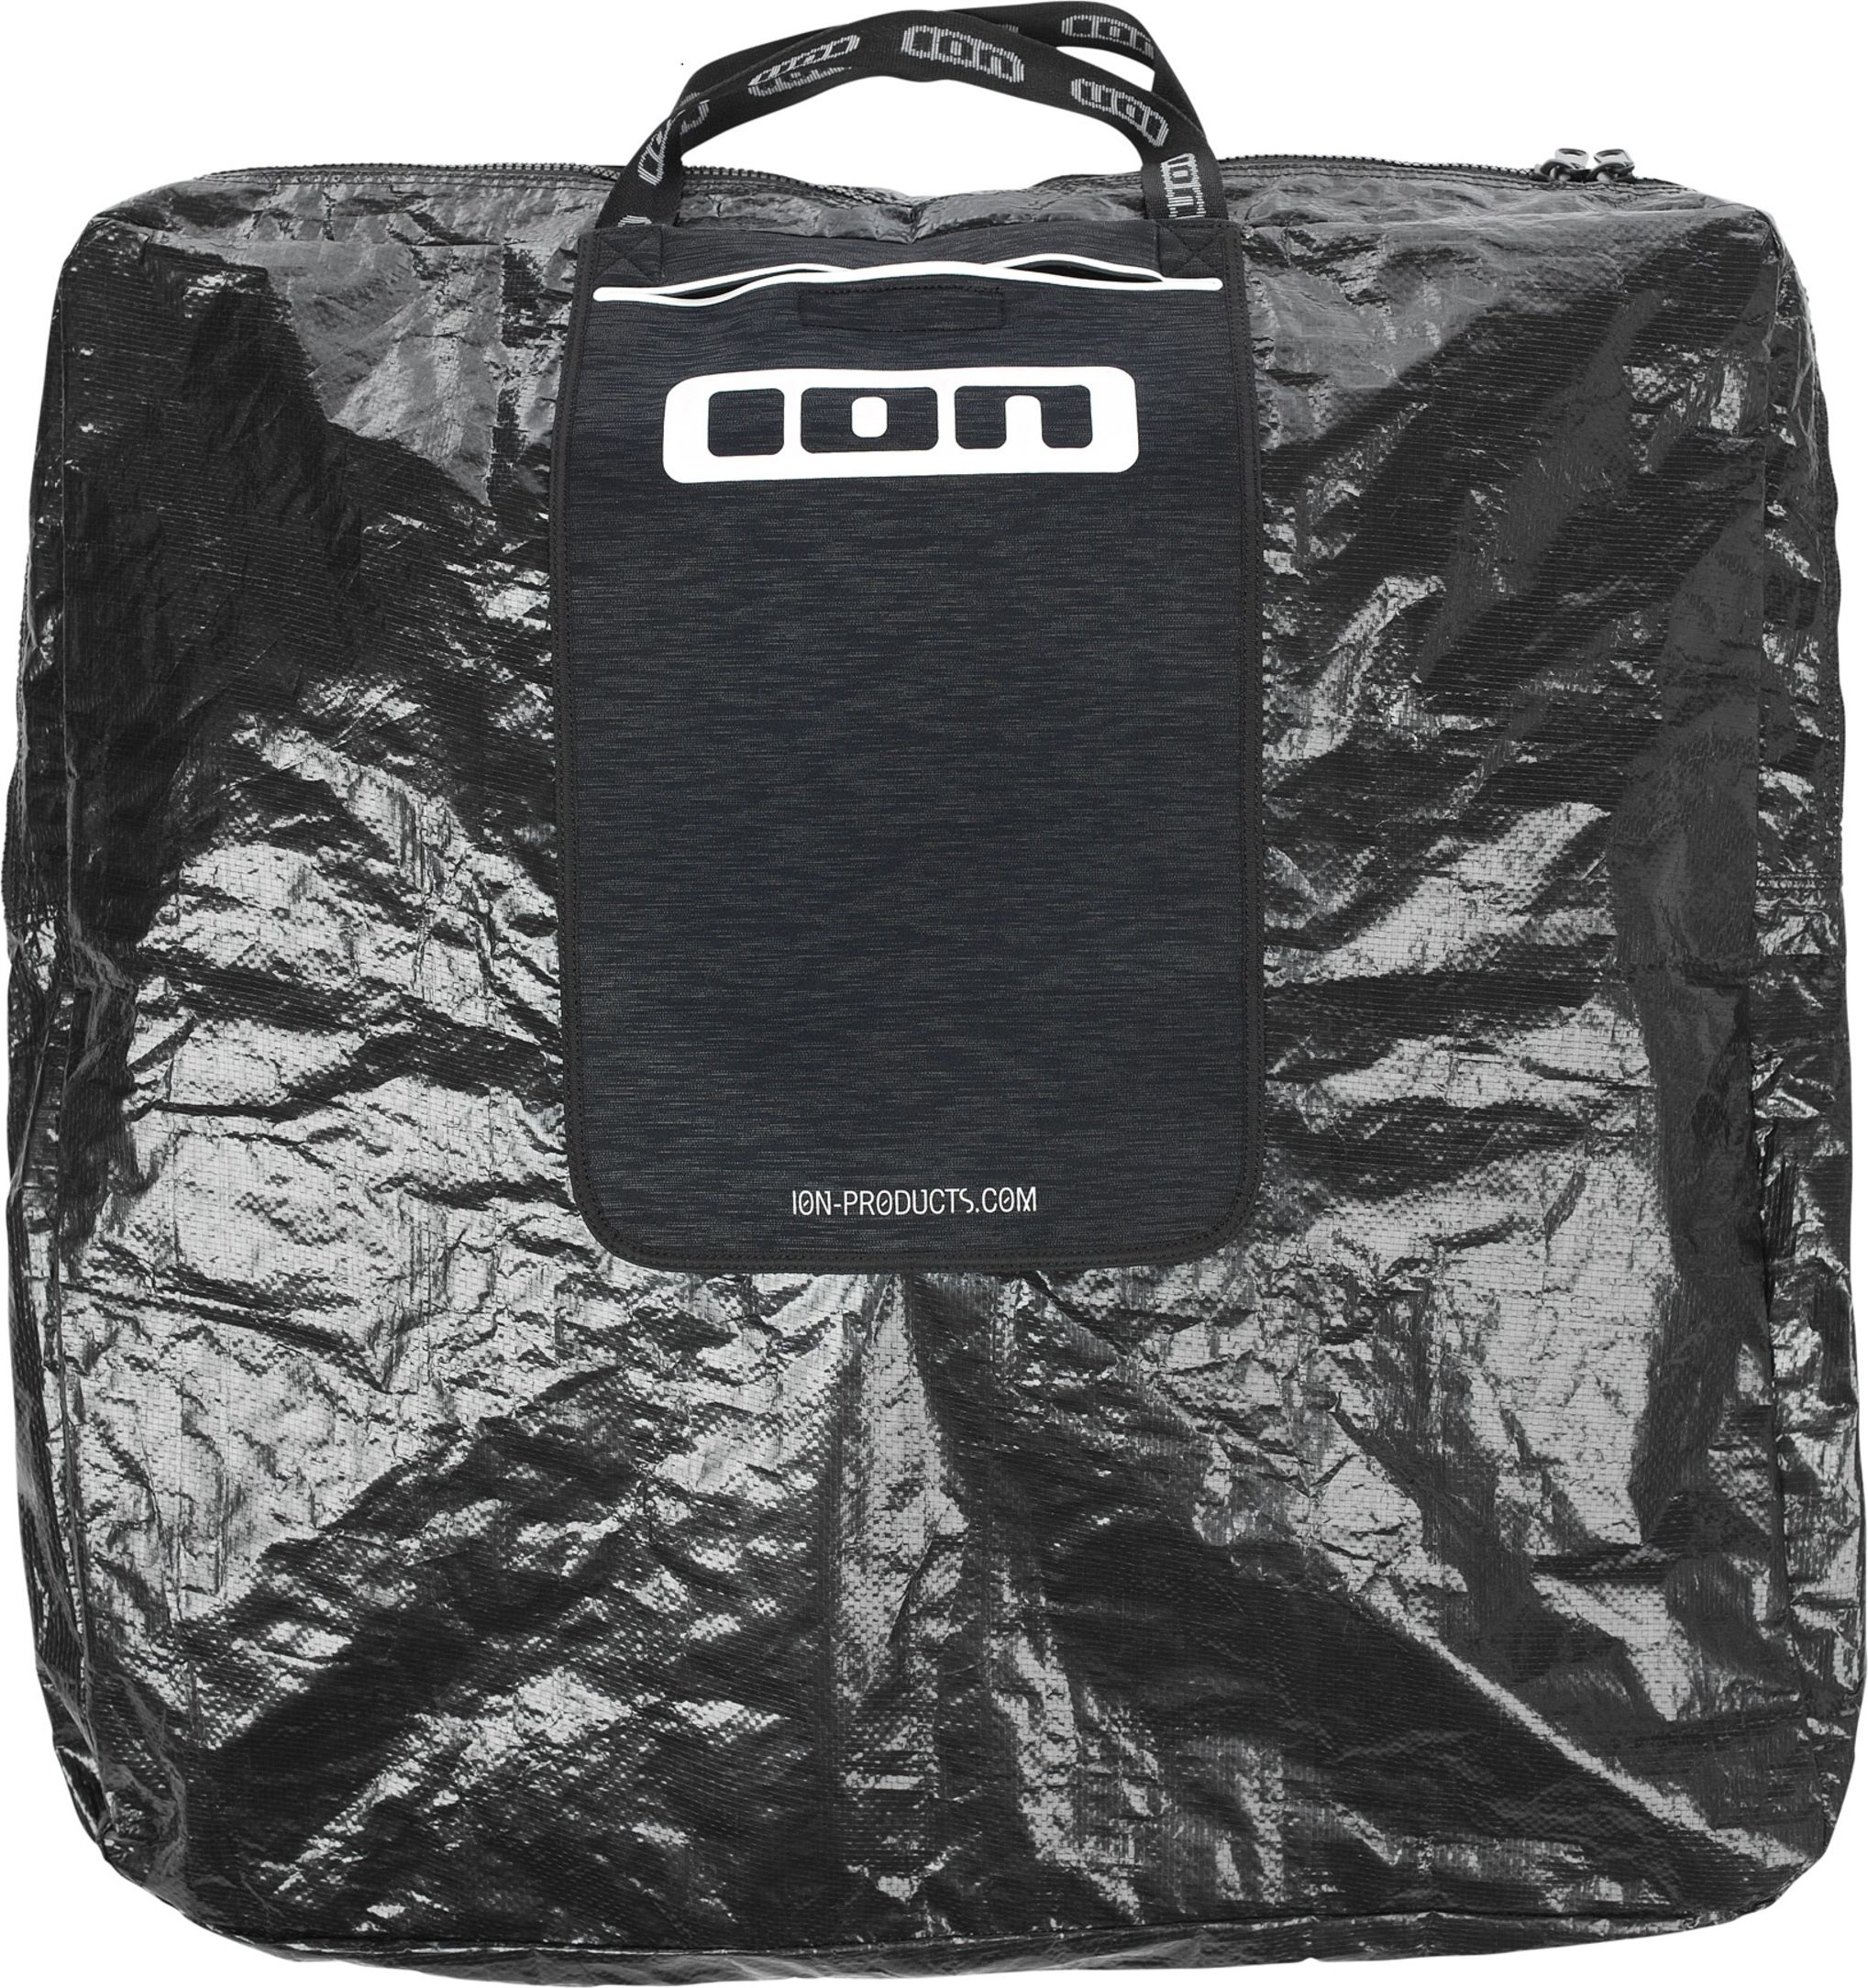 Universal Wheel Bag black